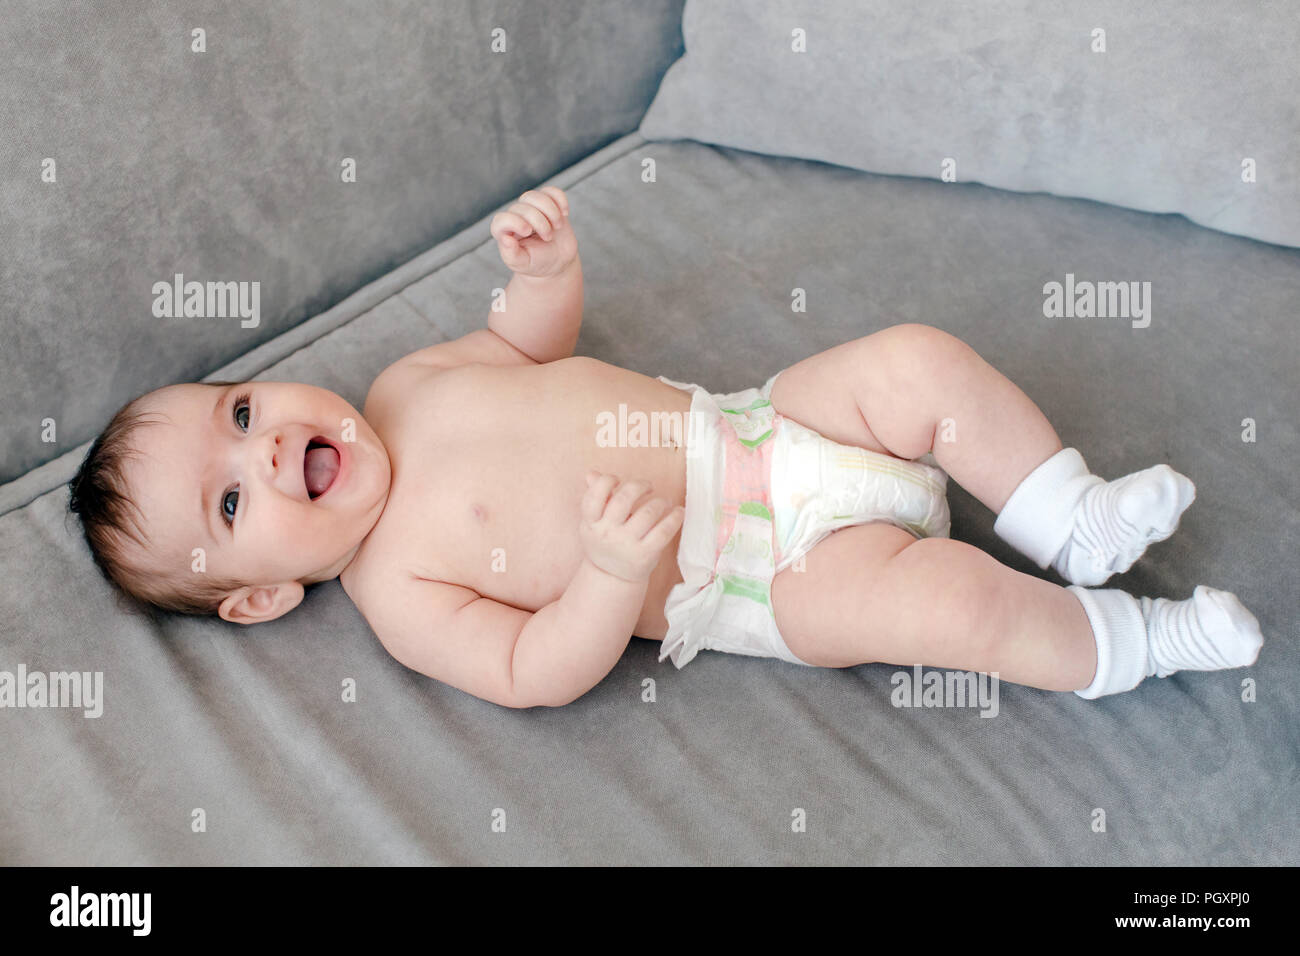 Cheerful adorable baby on sofa Stock Photo